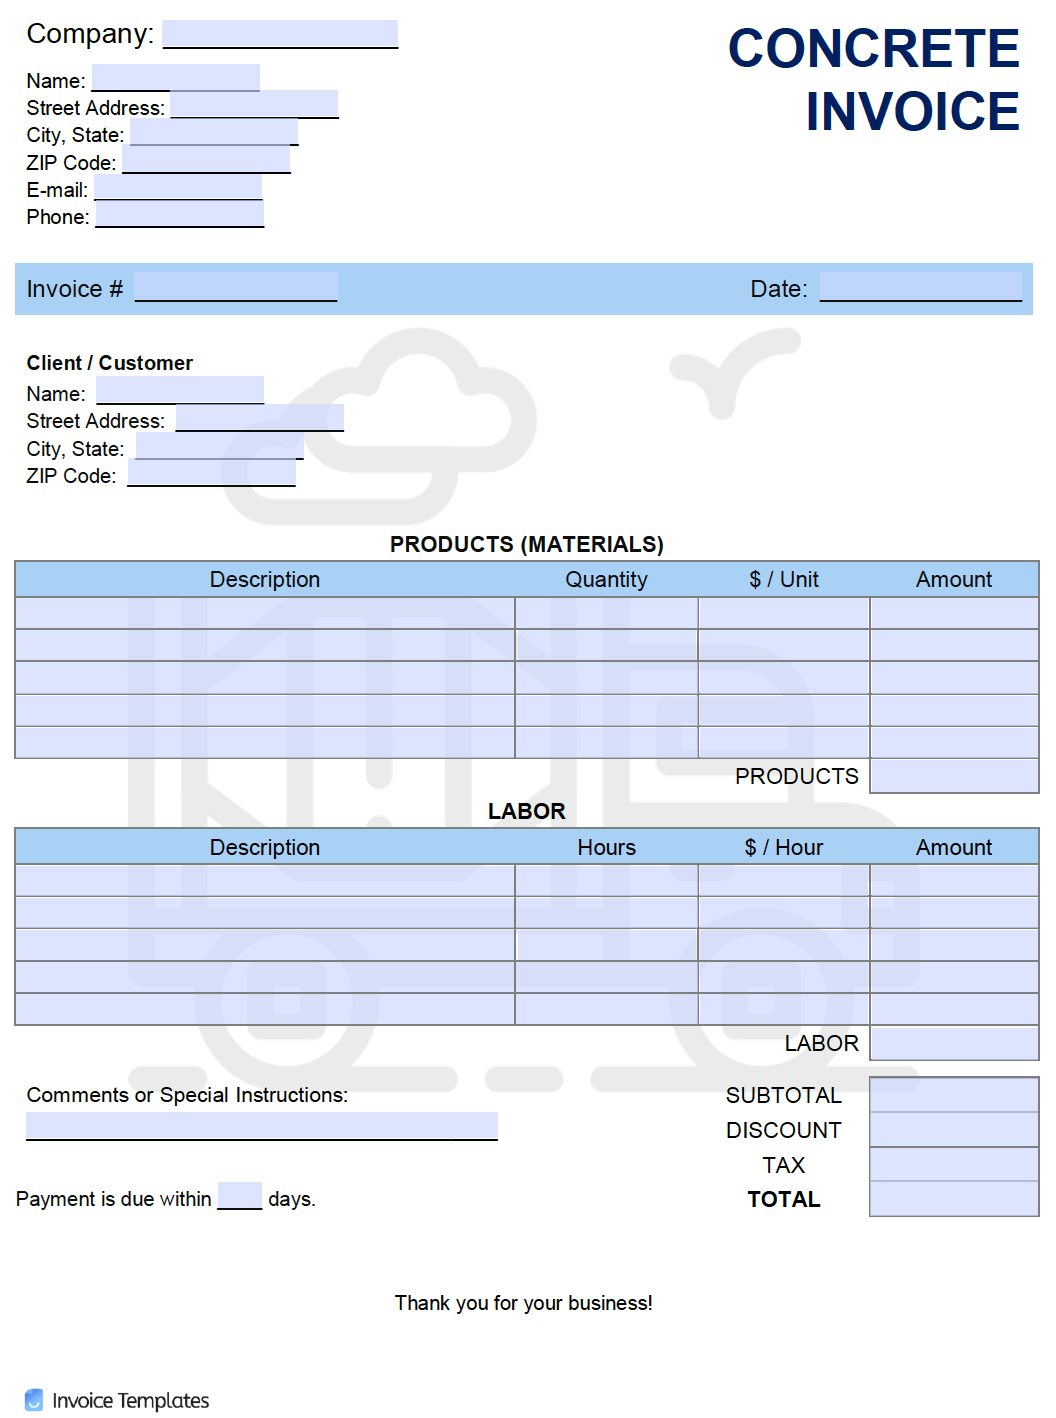 Free Concrete Invoice Template  PDF  WORD  EXCEL Regarding Roofing Invoice Template Free